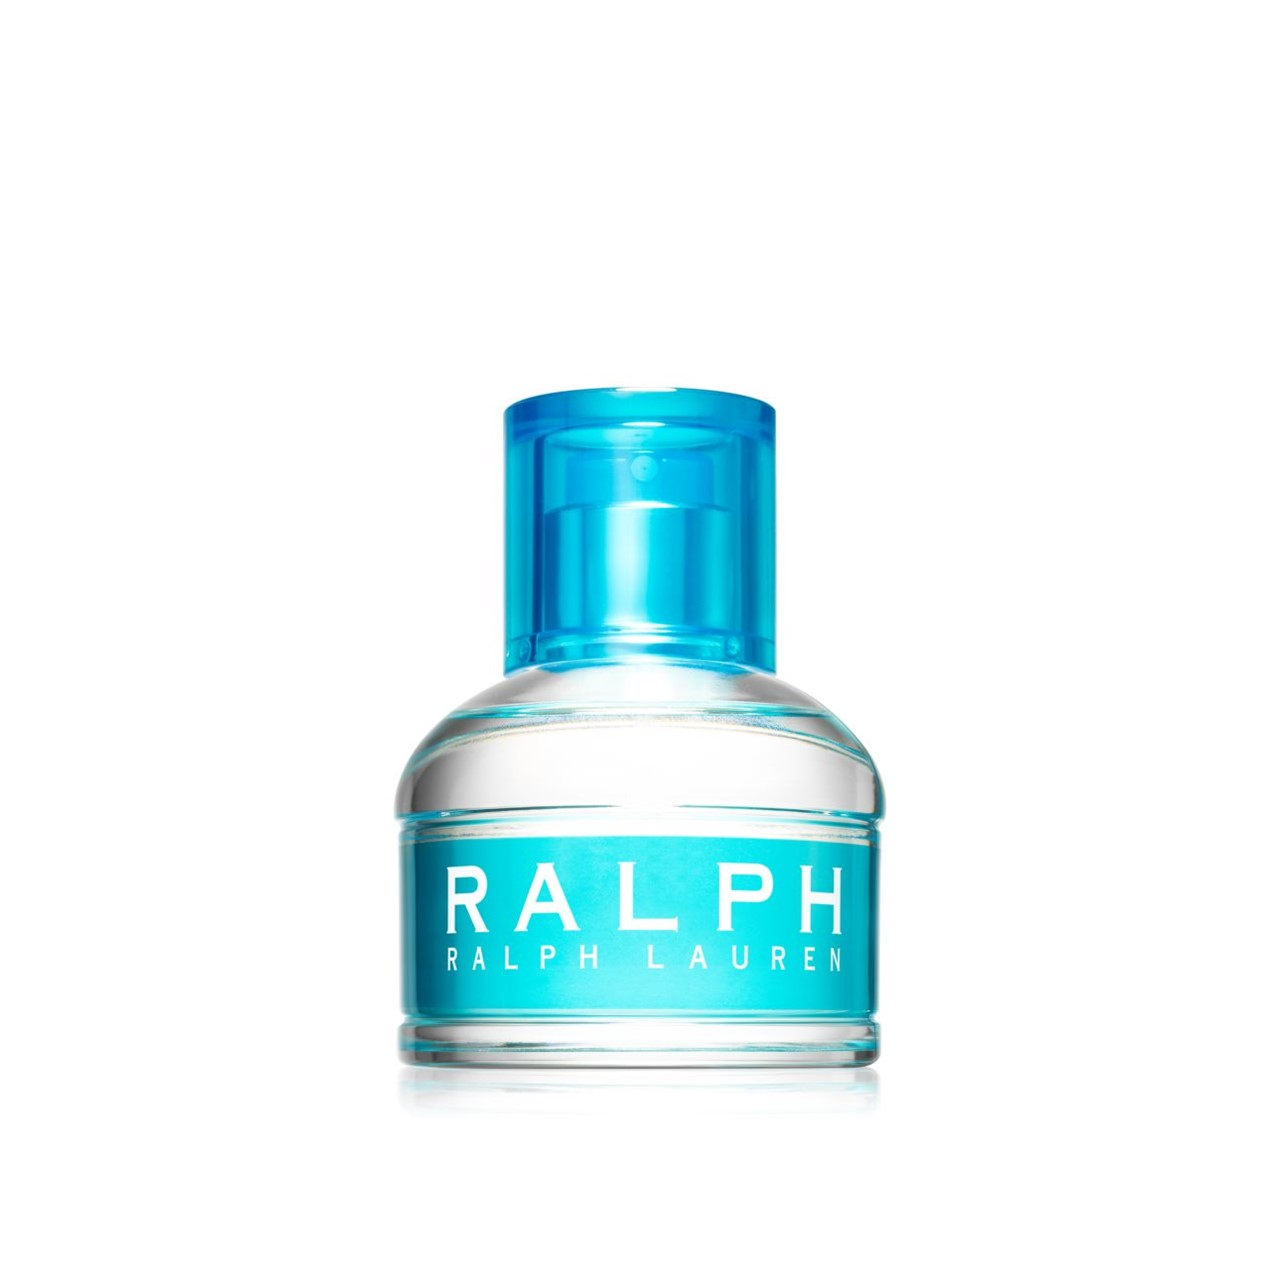 Buy Ralph Lauren Ralph Eau 30ml oz) (1.0fl de · Toilette USA